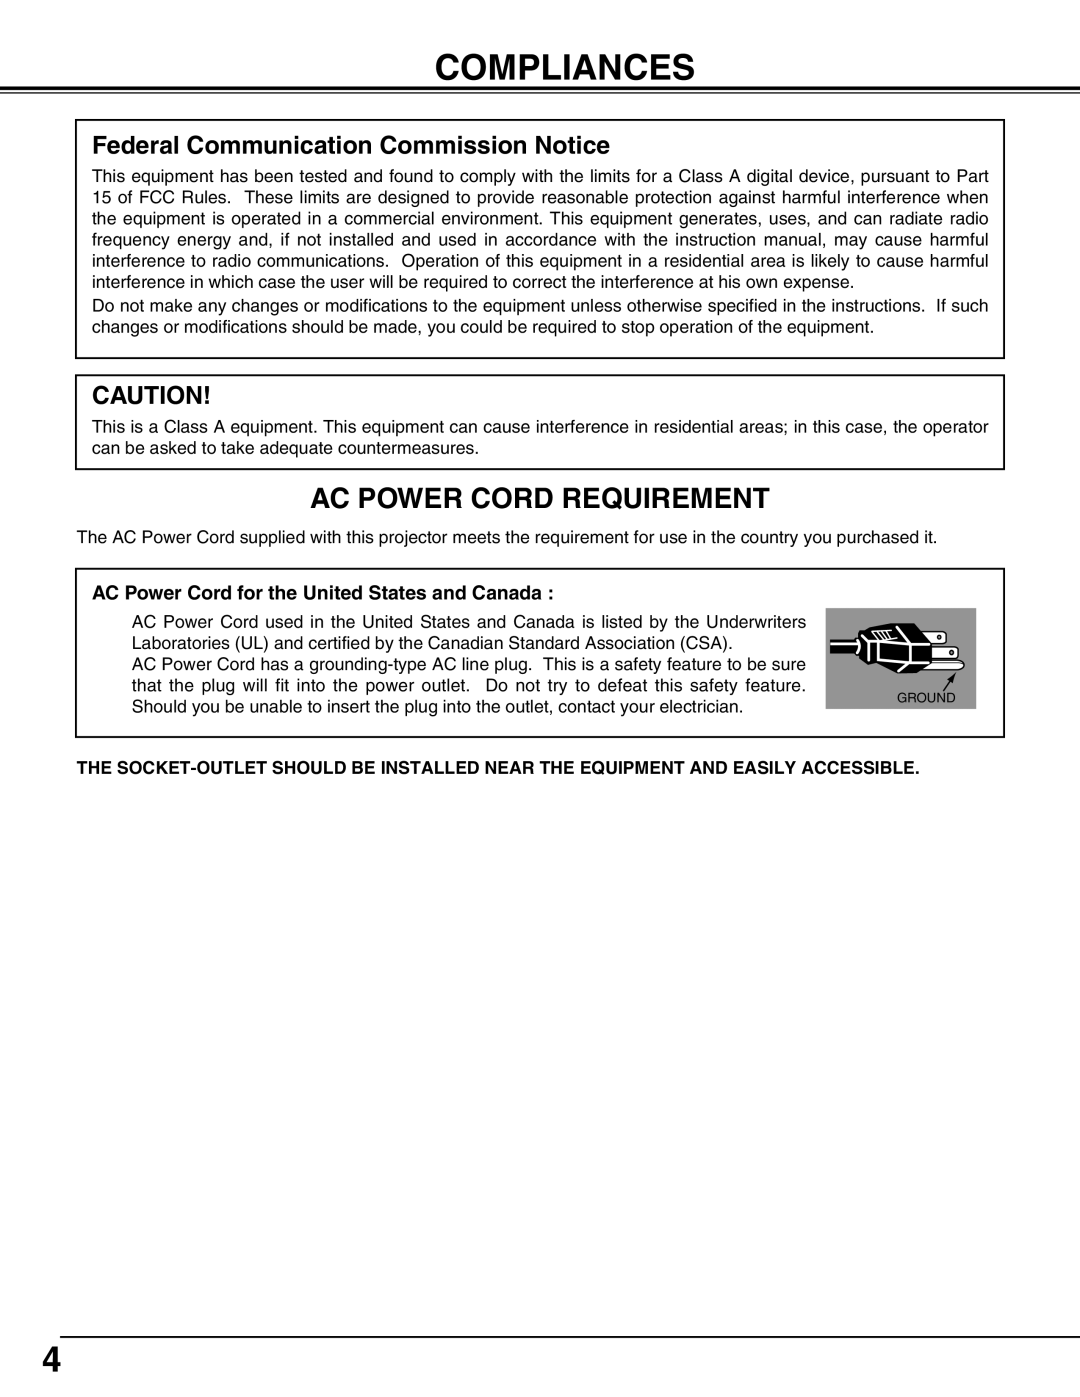 Eiki LC-SX4LA instruction manual Compliances, Ac Power Cord Requirement, Federal Communication Commission Notice 